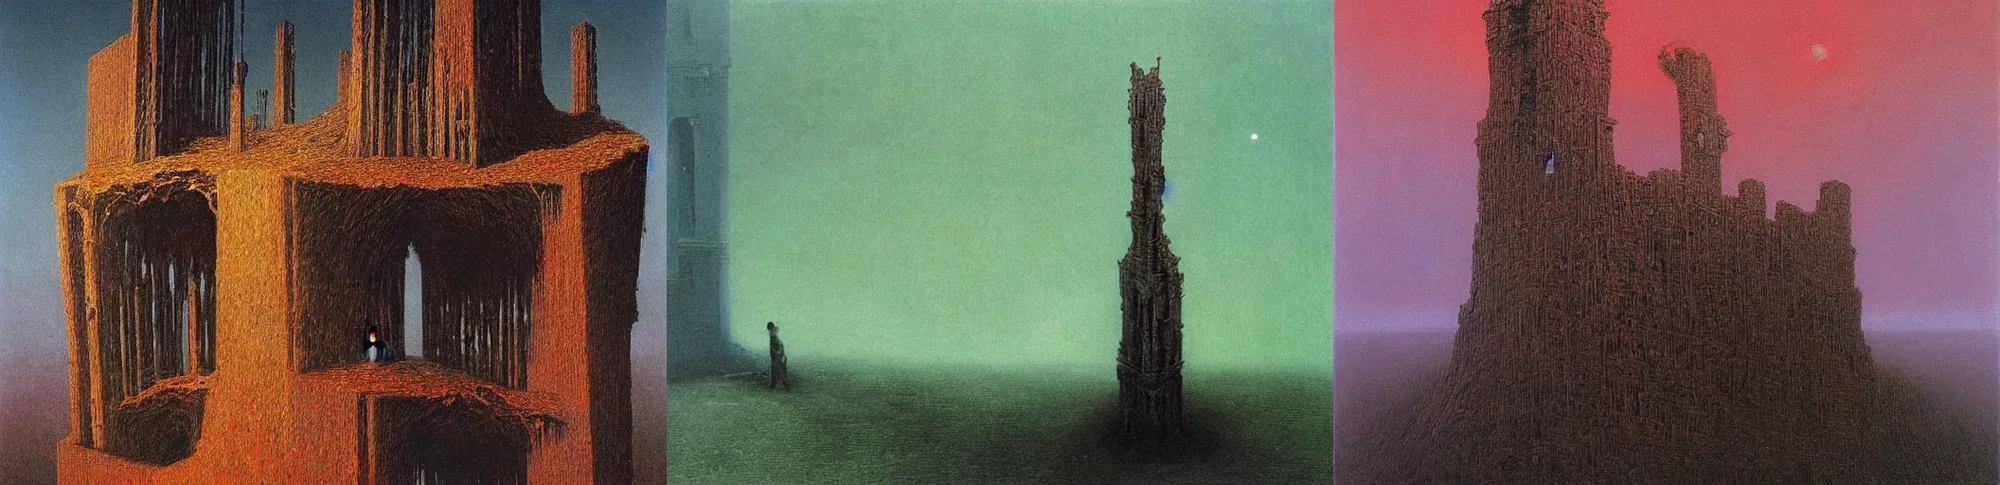 Prompt: tower of souls, artwork by Beksiński